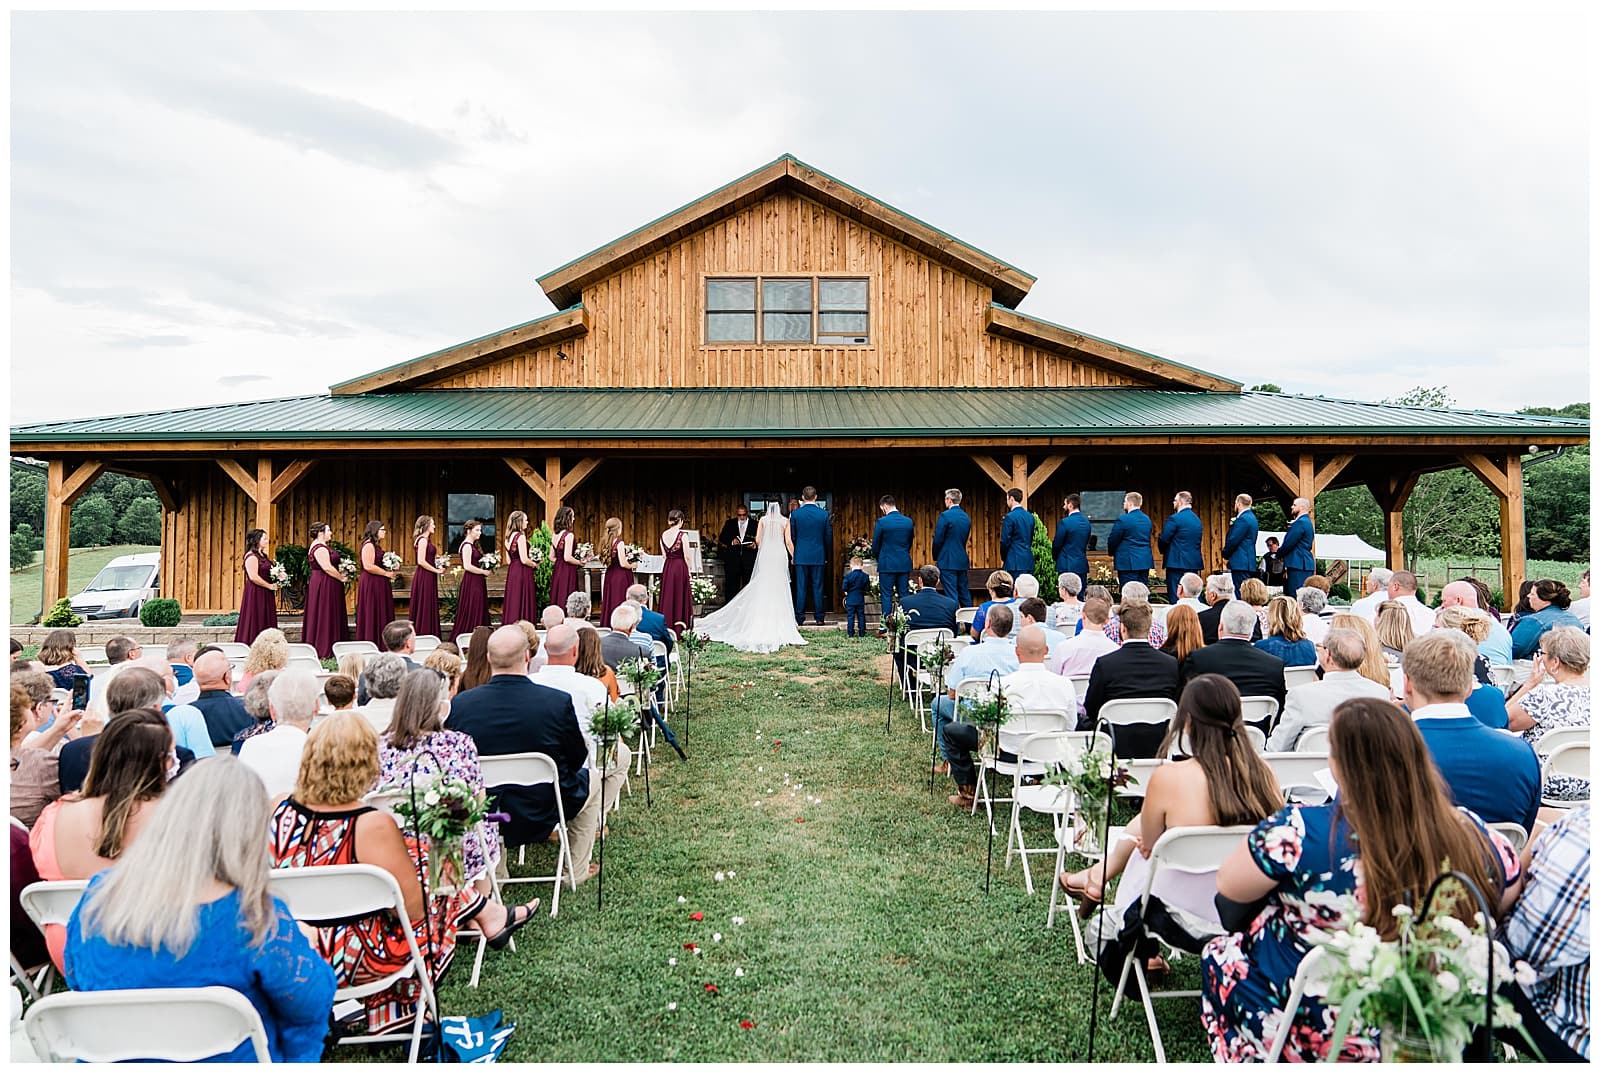 Danielle-Defayette-Photography-Middle-Fork-Barn-Wedding-VA-2020_0026.jpg